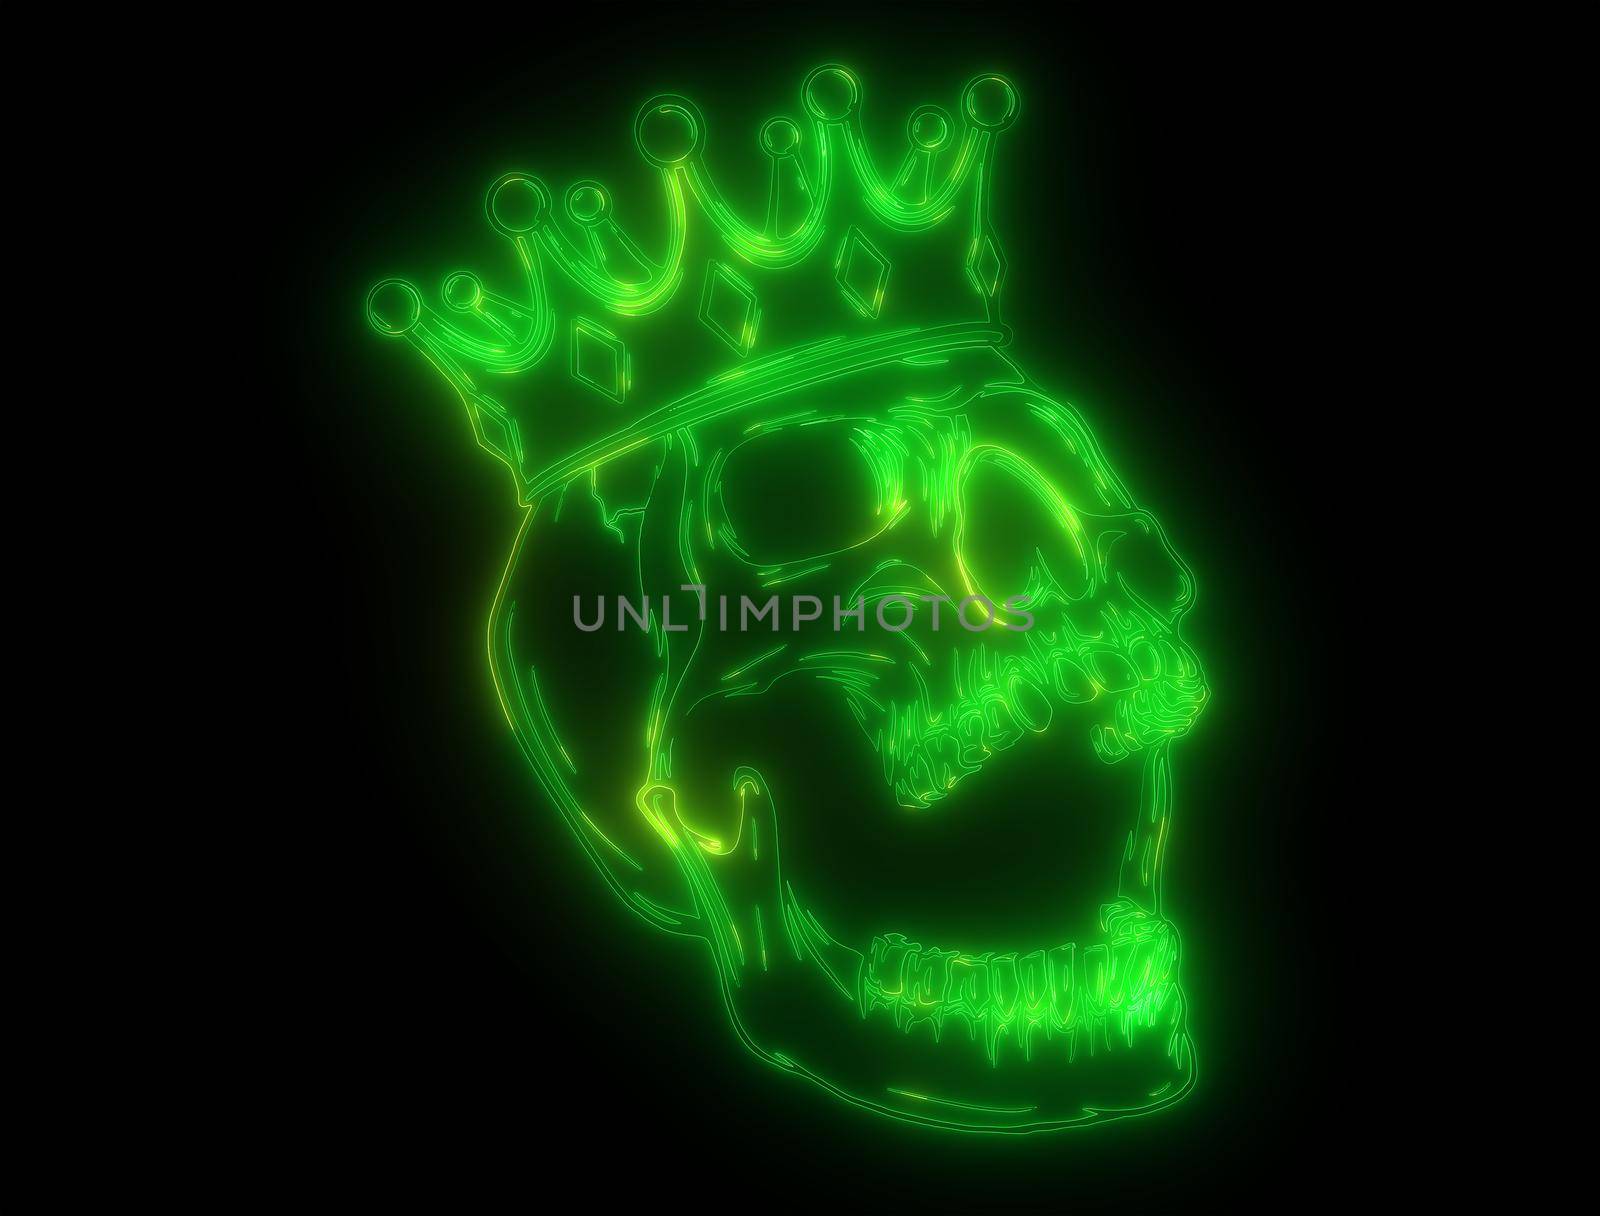 king skull wearing crown. illustration